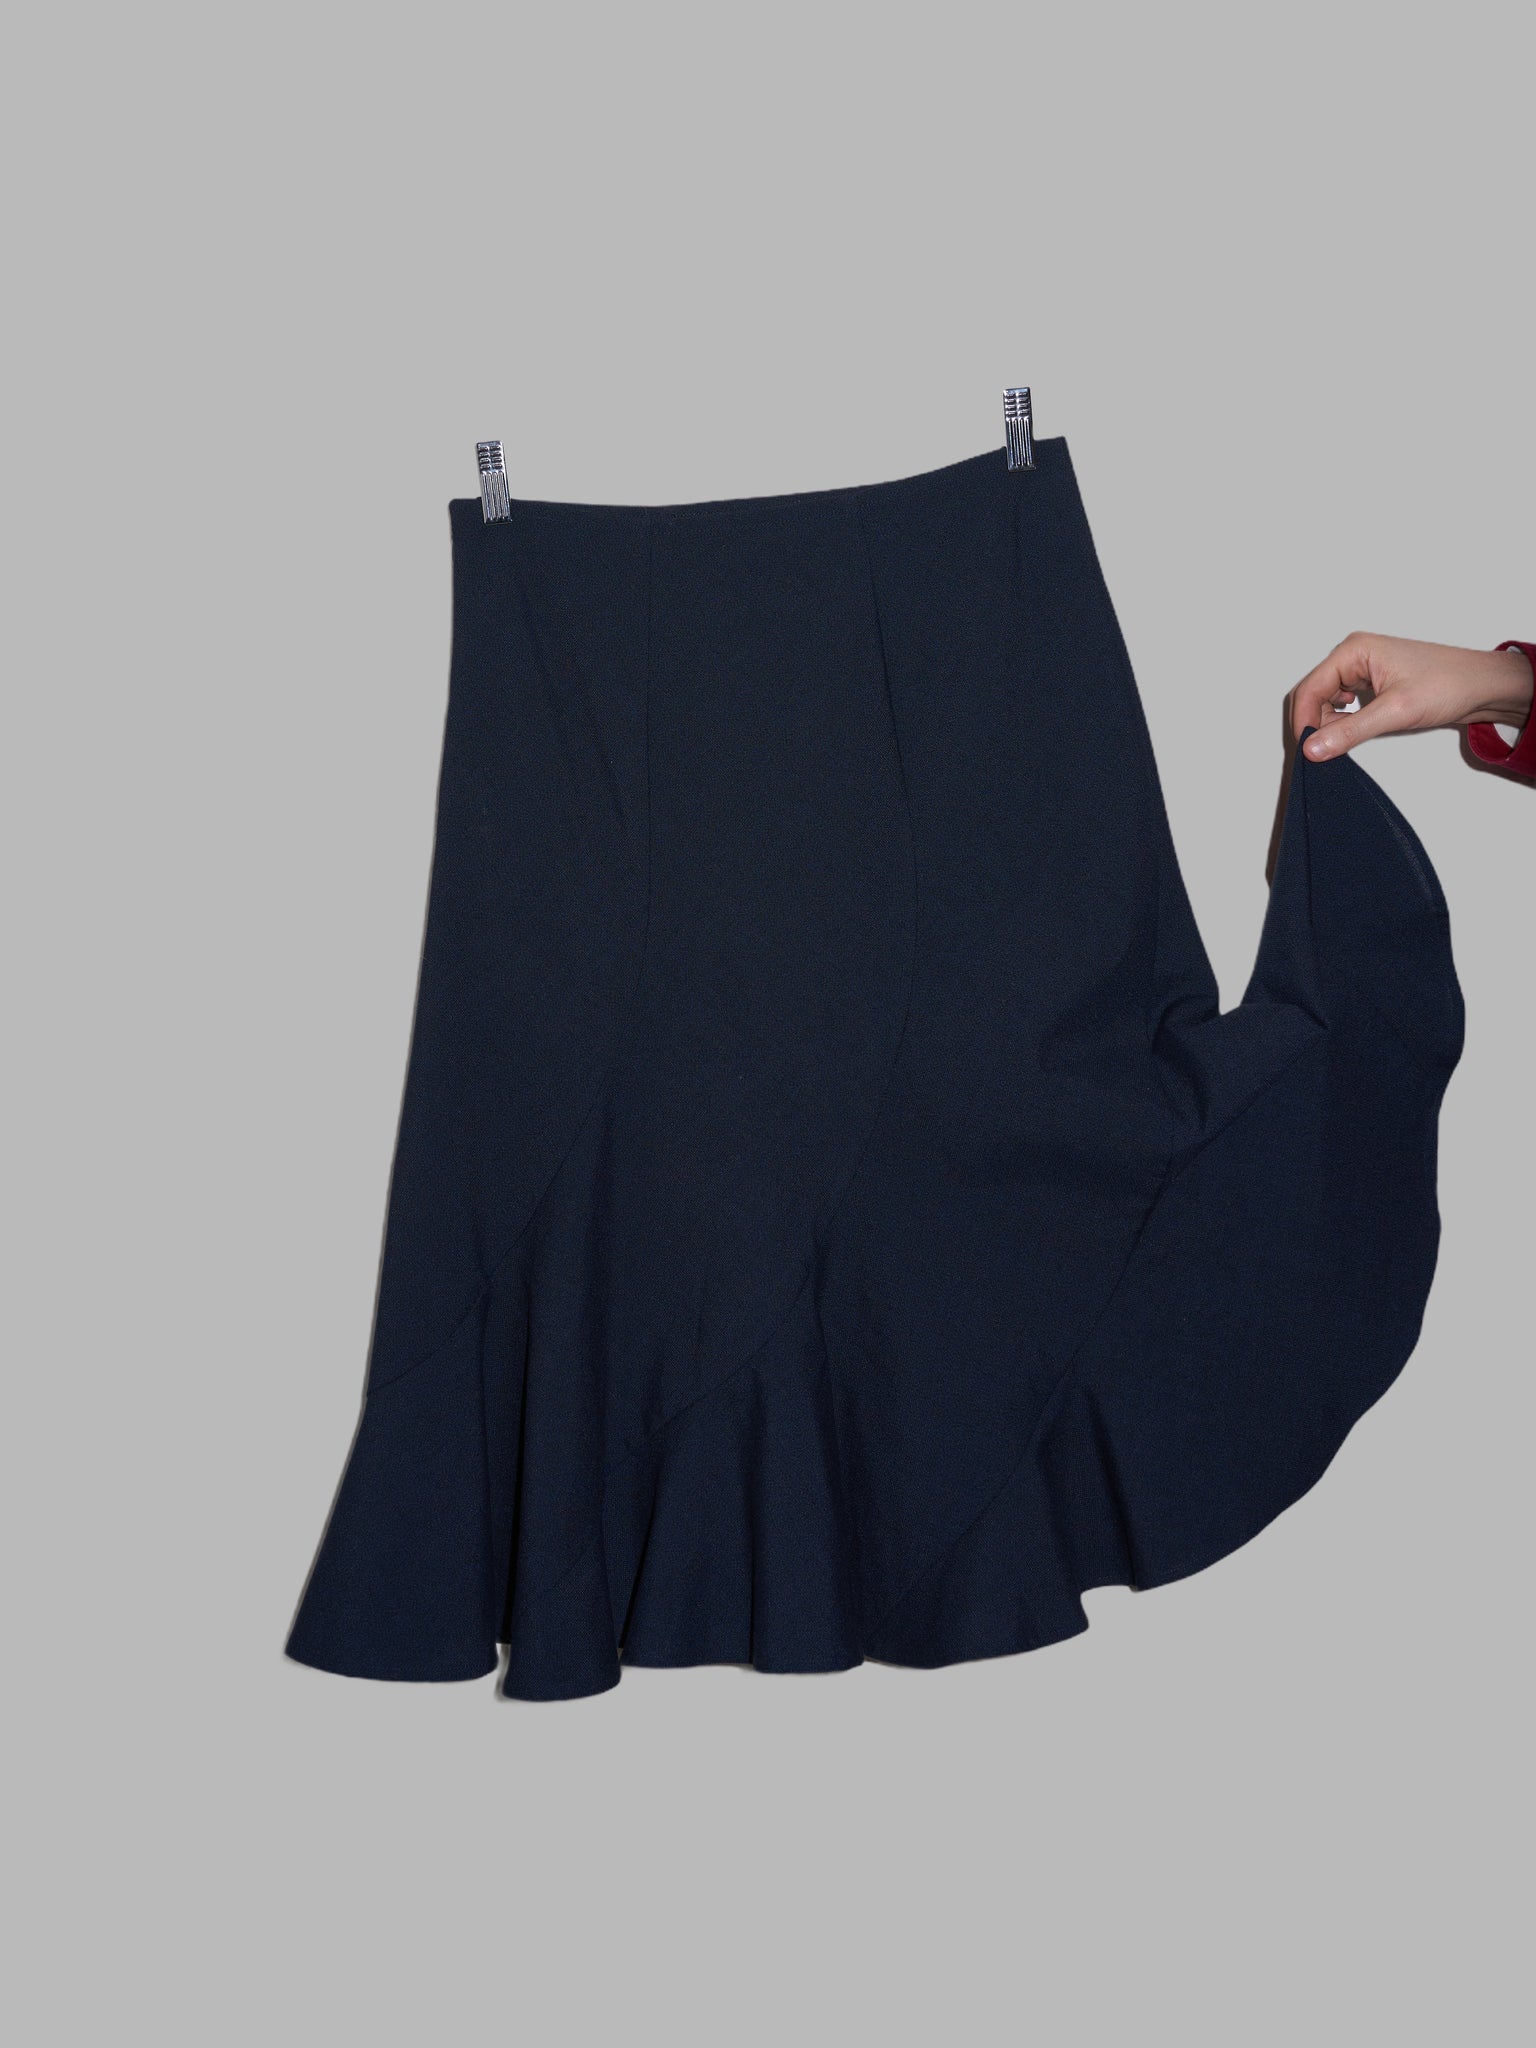 Junya Watanabe Comme des Garcons 2000 dark navy wool poly paneled skirt - M